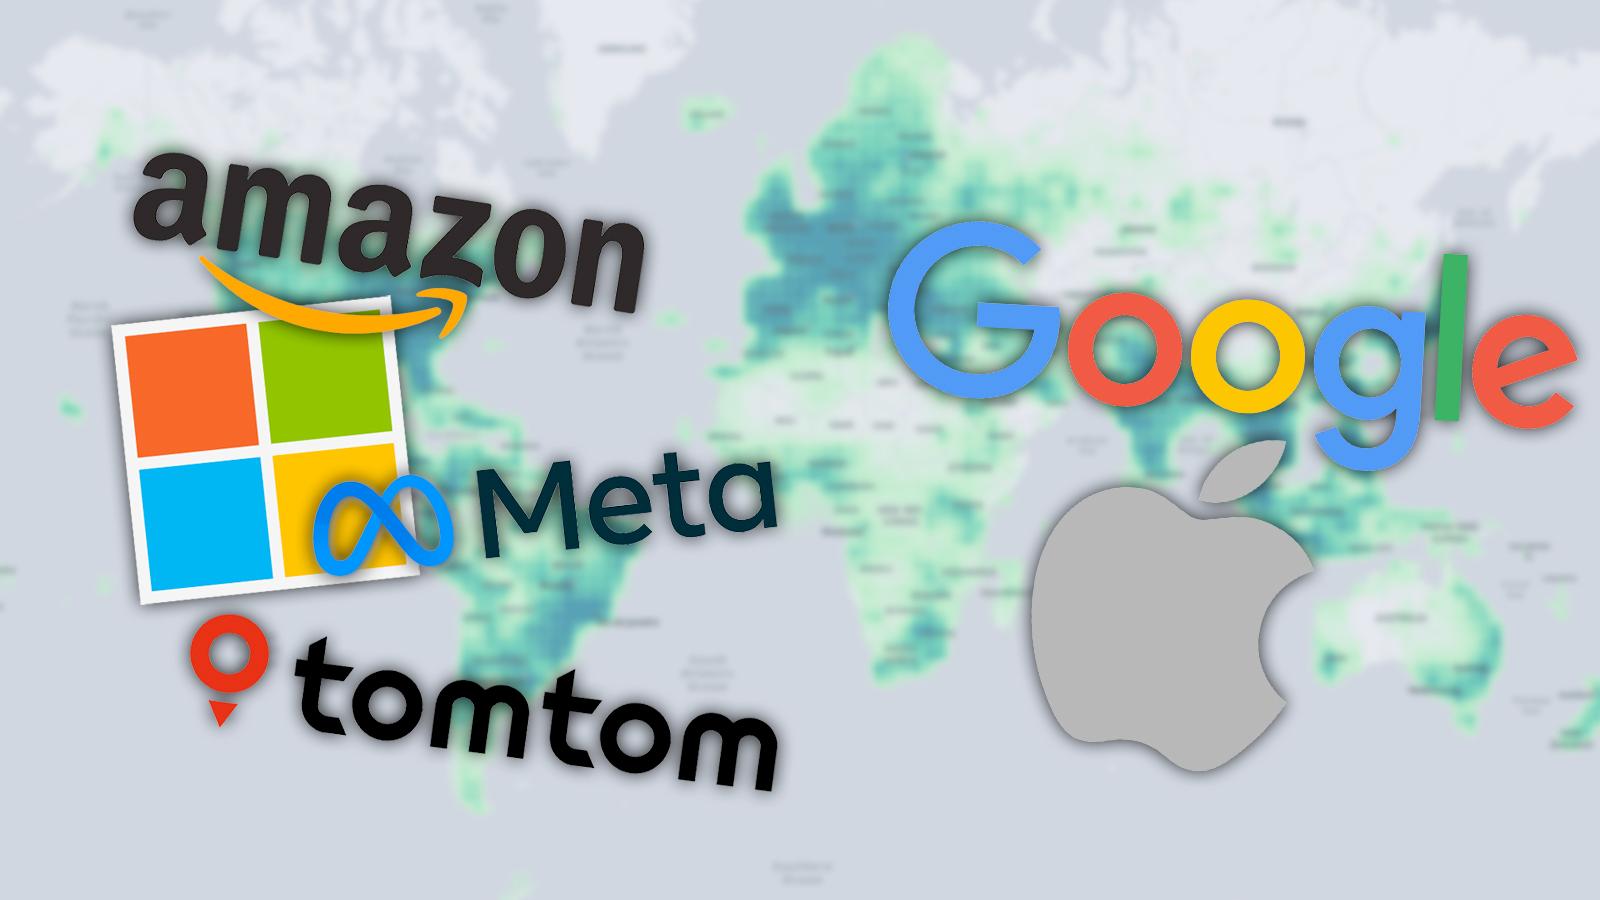 Amazon, Meta, Microsoft, TomTom, Apple, Google Logos on Overture Maps